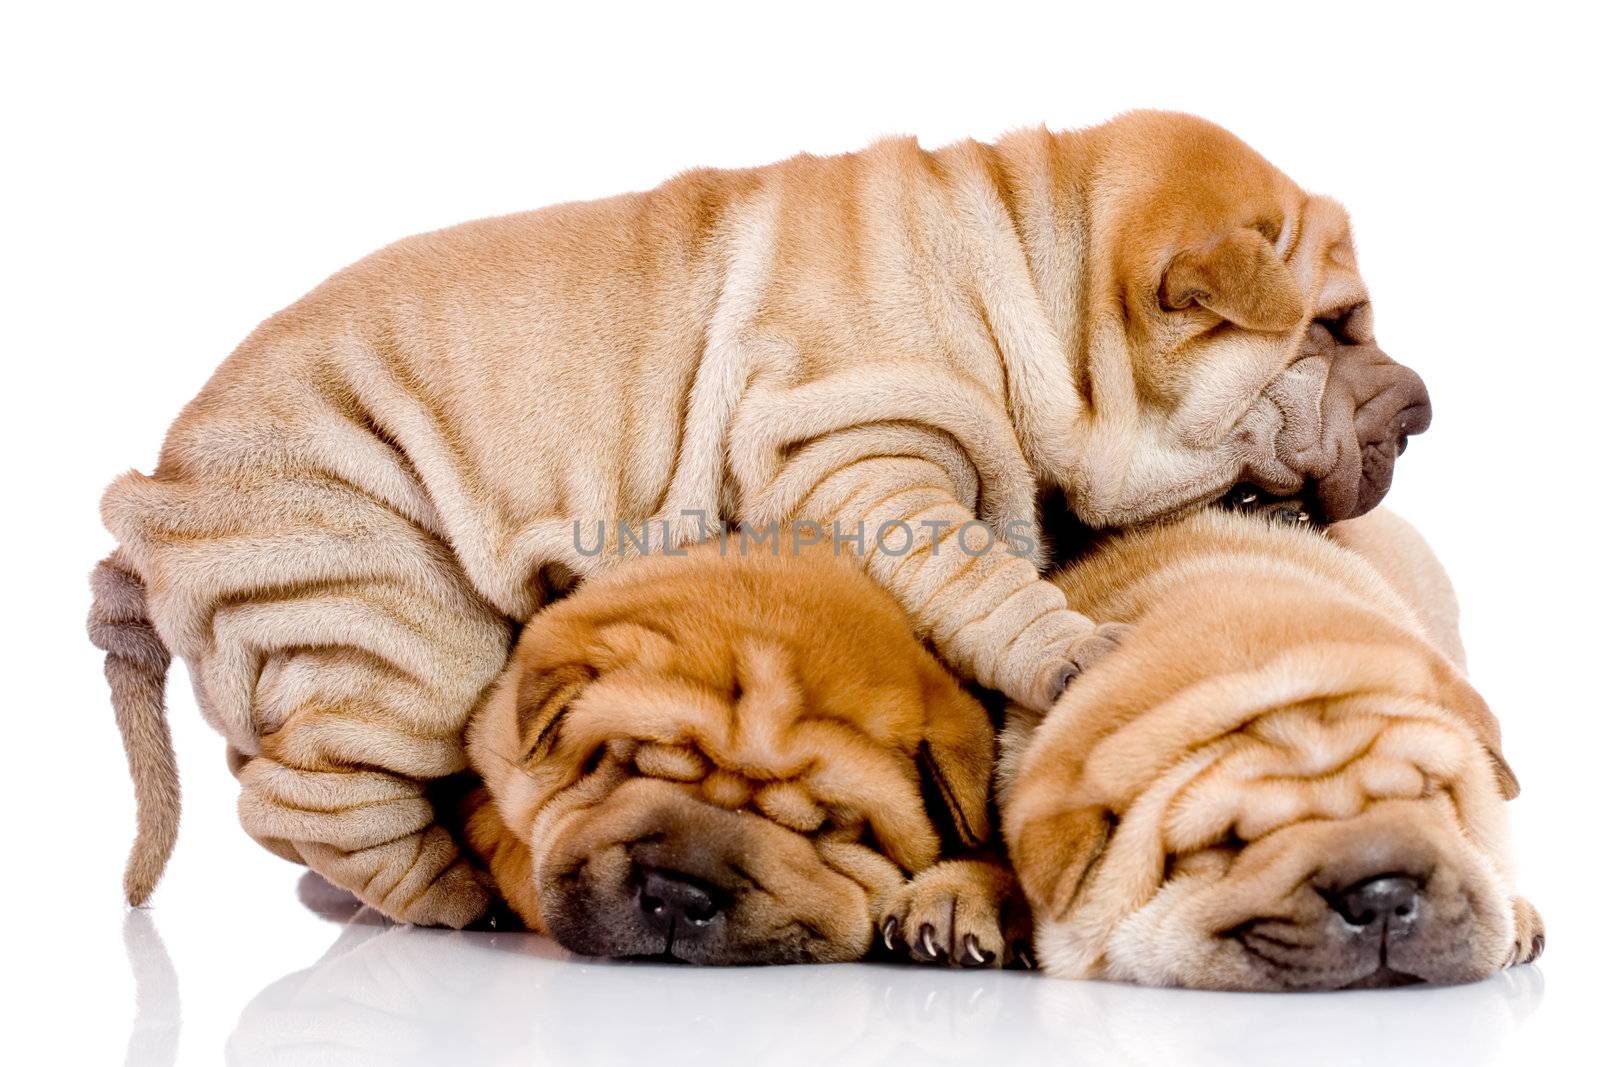 three Shar Pei baby dogs by kokimk